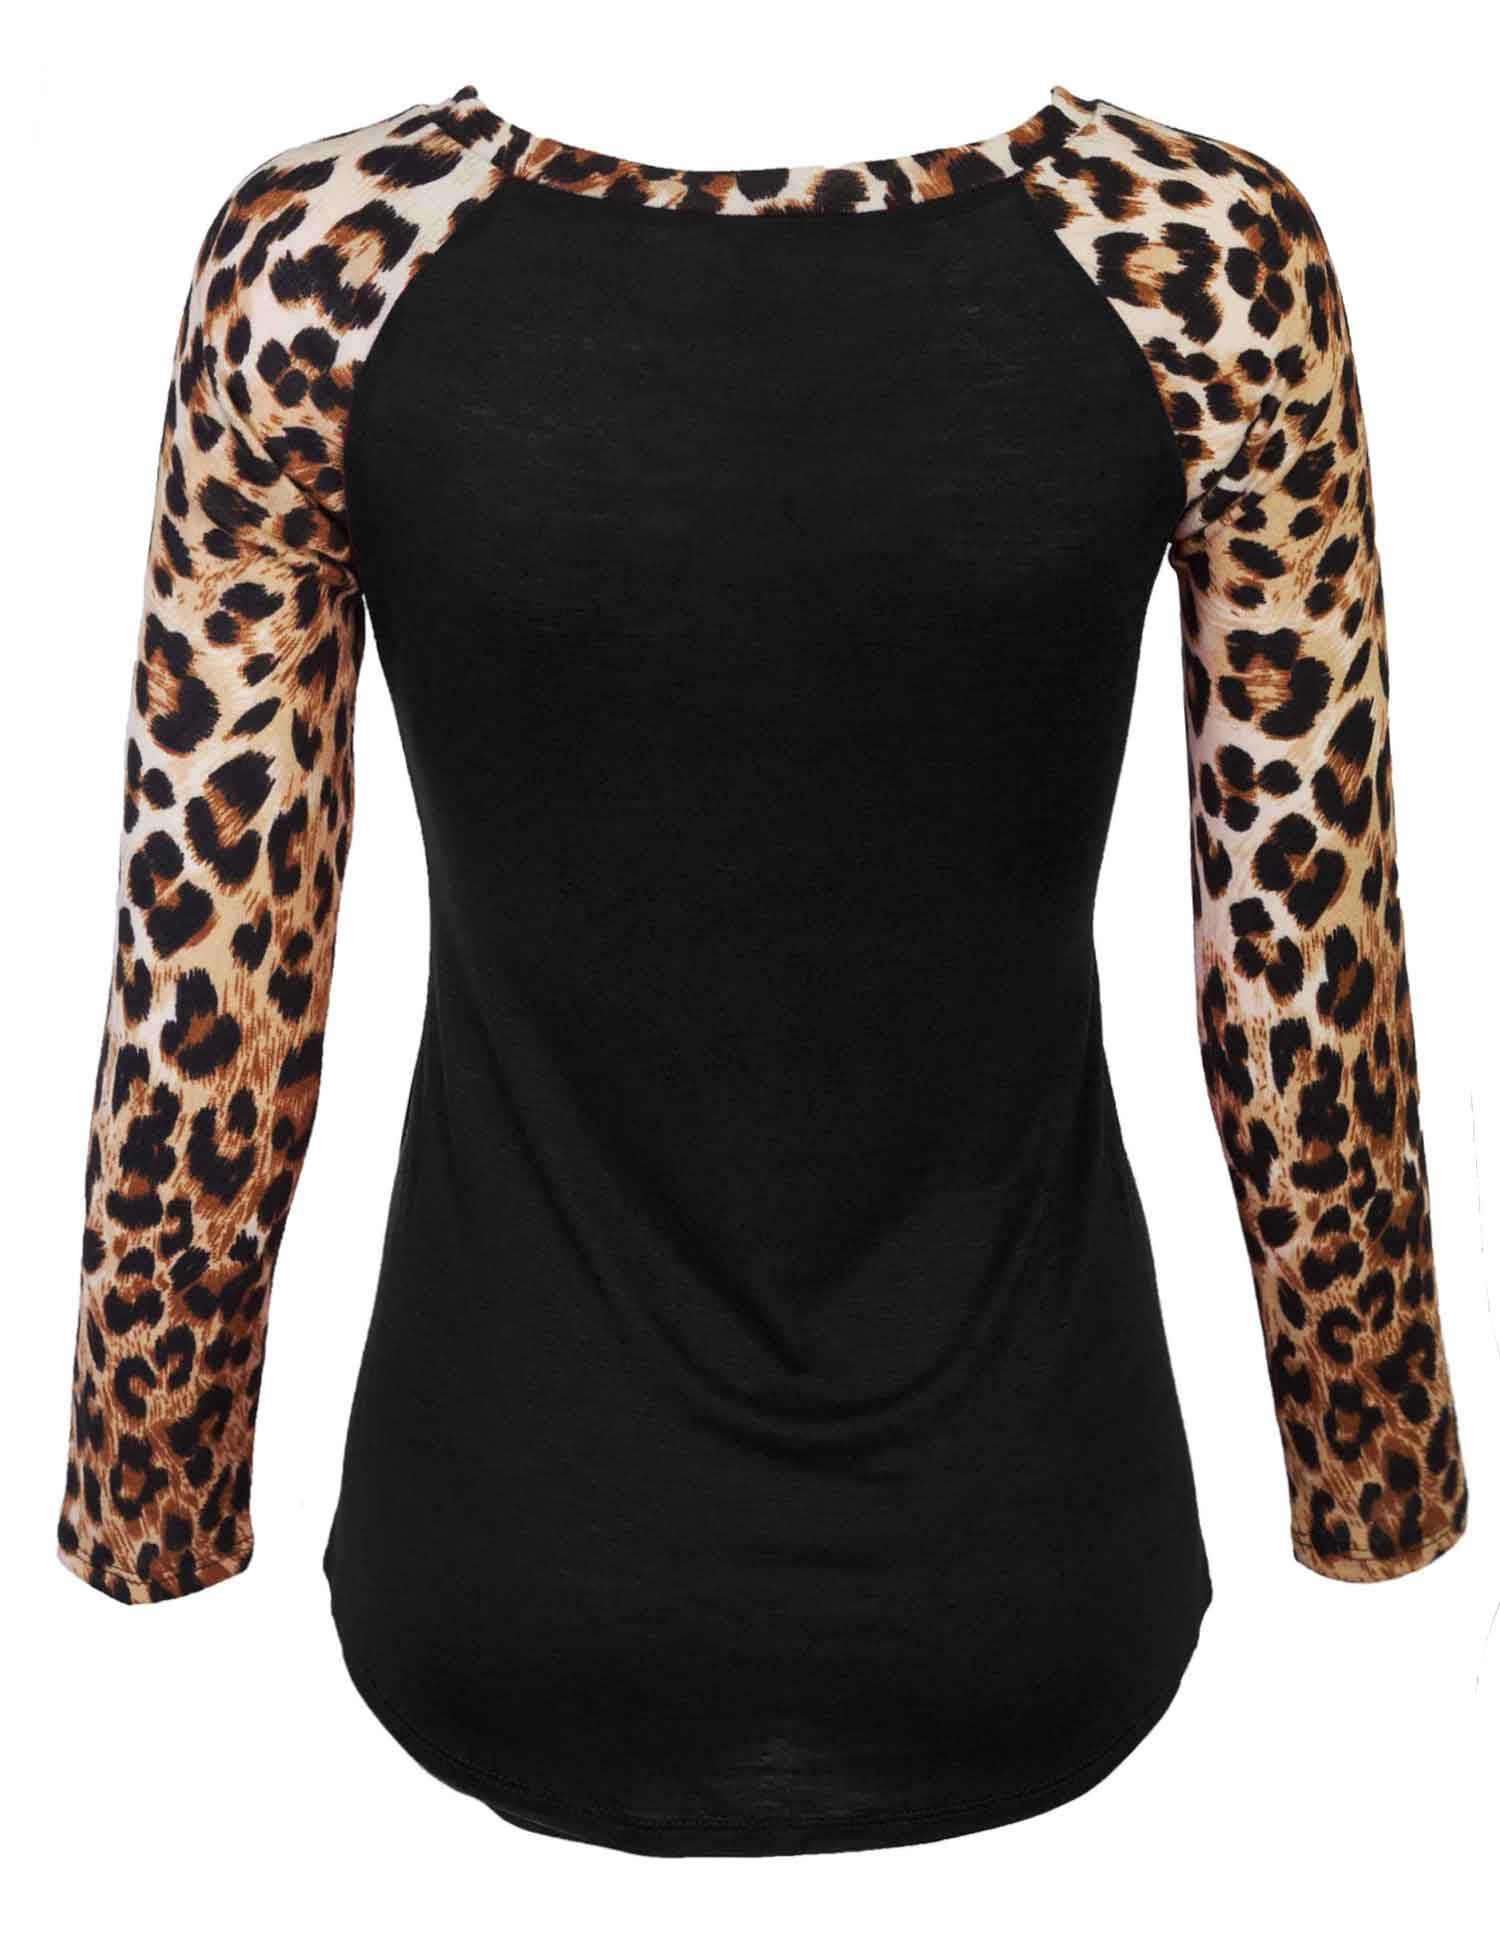 raglan shirt with leopard sleeves